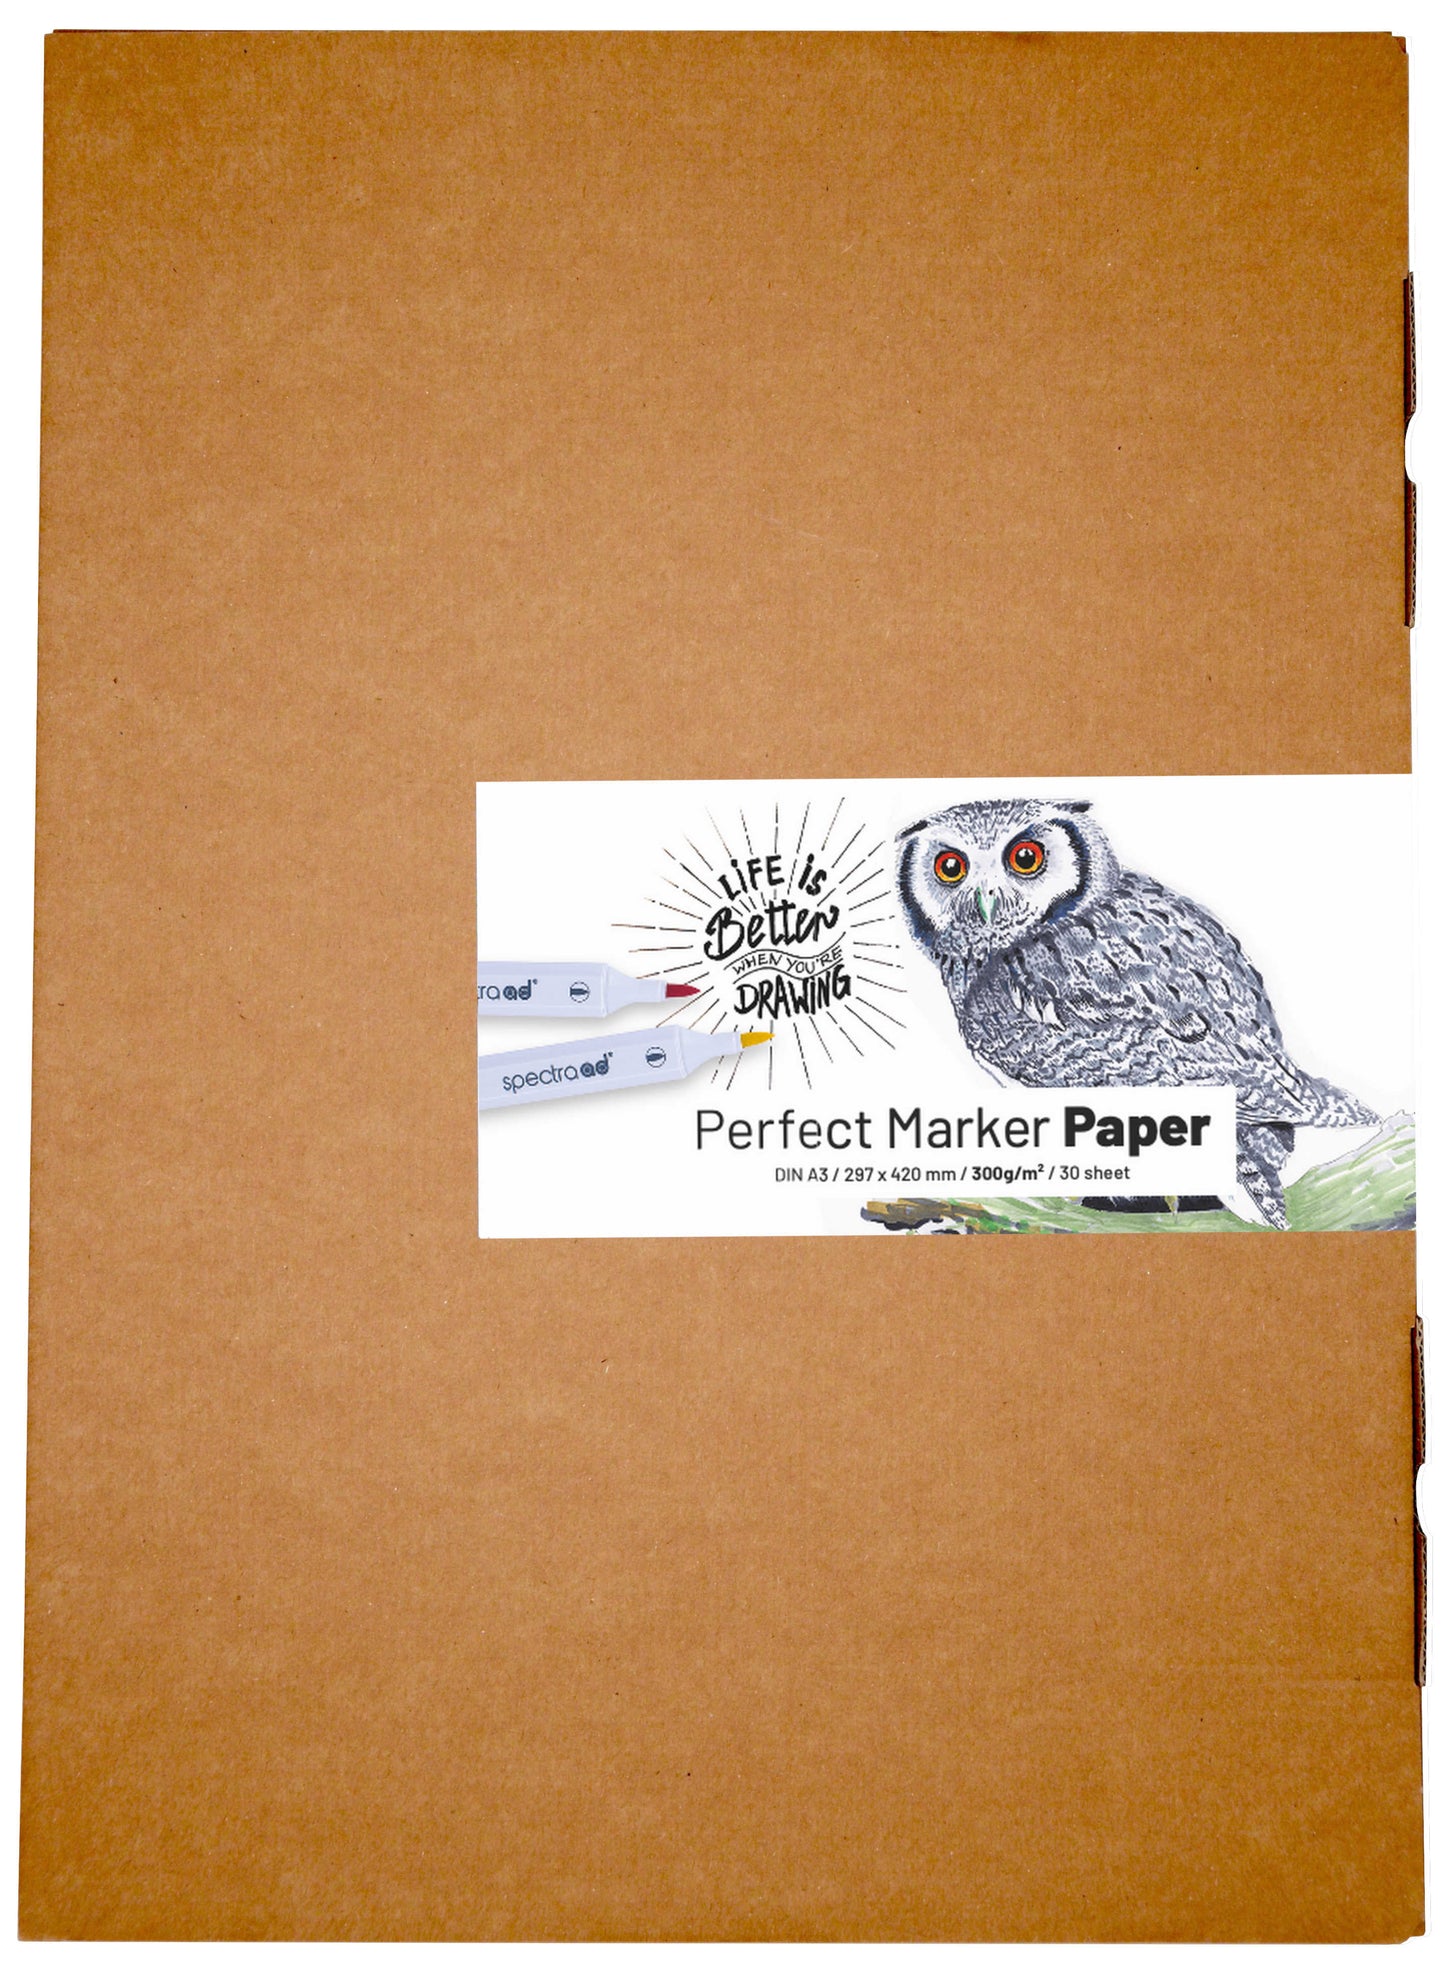 Spectra AD - Perfekt Marker Paper